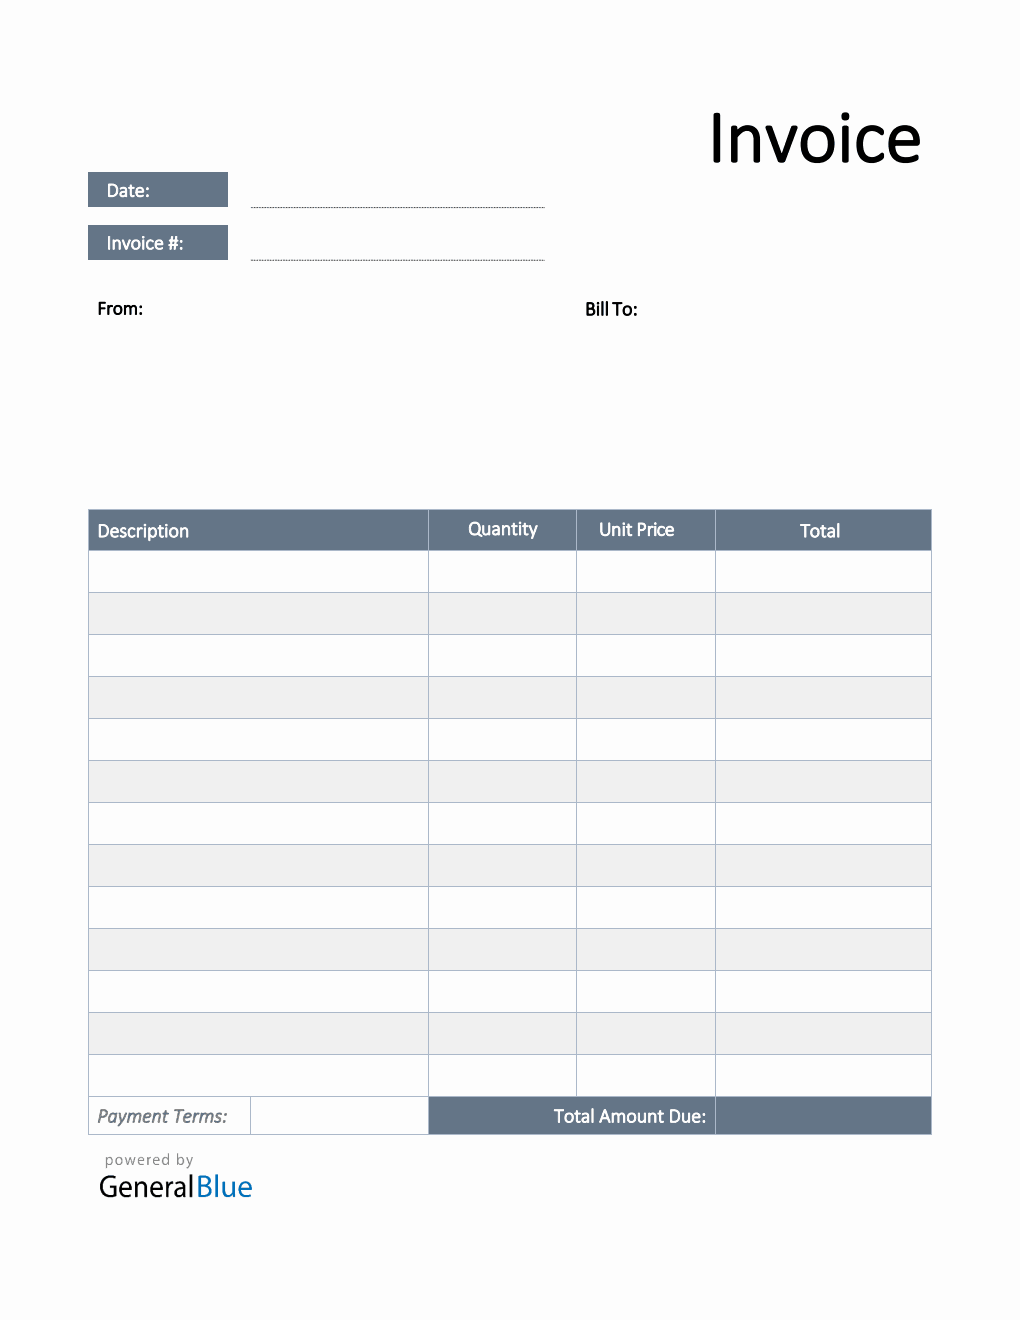 U.S. Invoice Template in PDF (Simple)